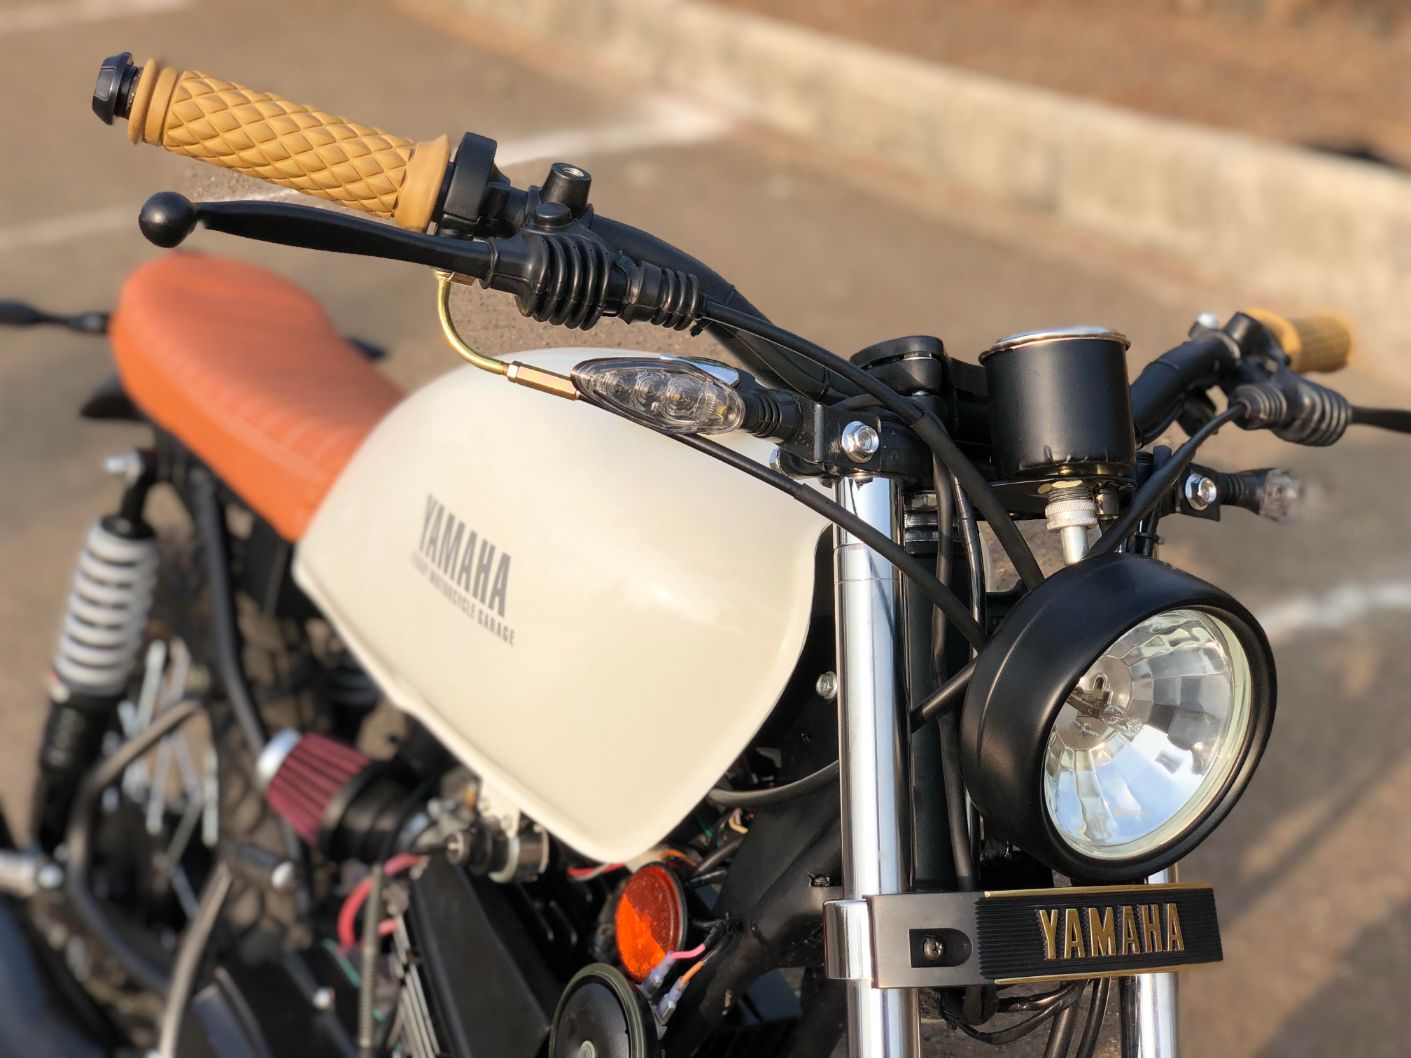 Meet Yamaha RX100 Premium Model By FIXUP Motorcycle Garage - view